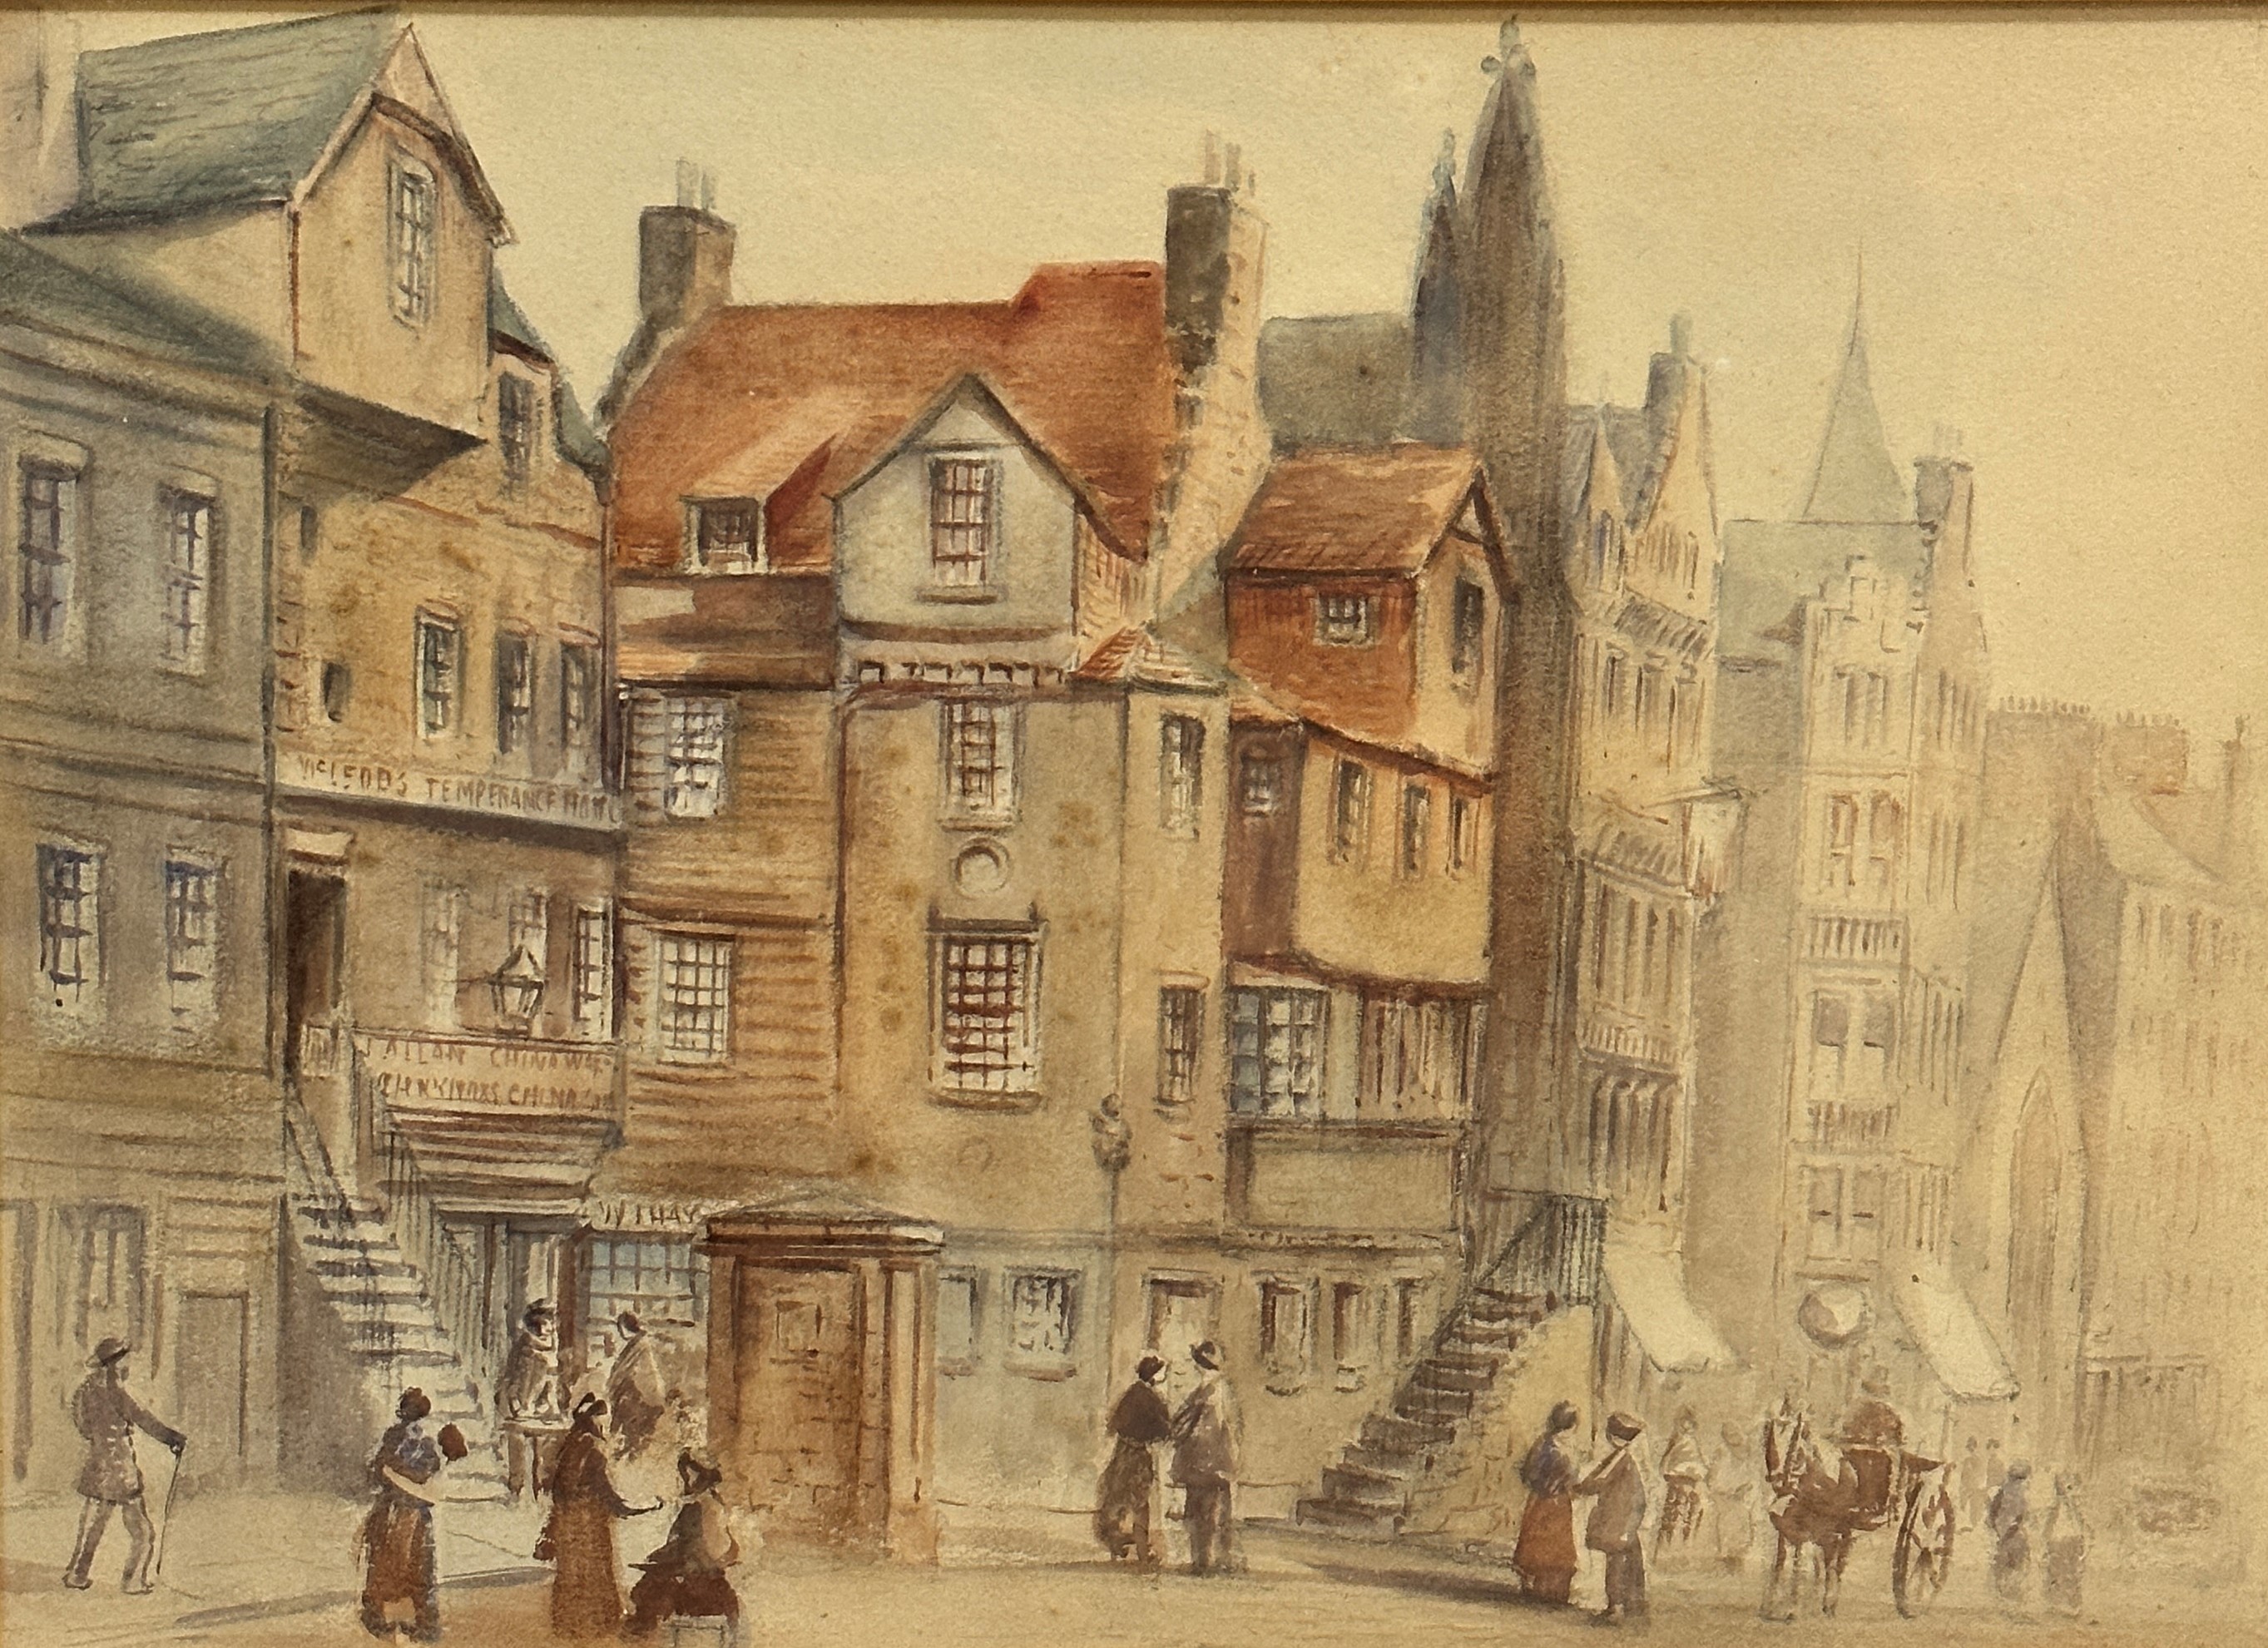 Scottish School, High Street Edinburgh, John Knox's House, watercolour, signed indistinctly, gilt